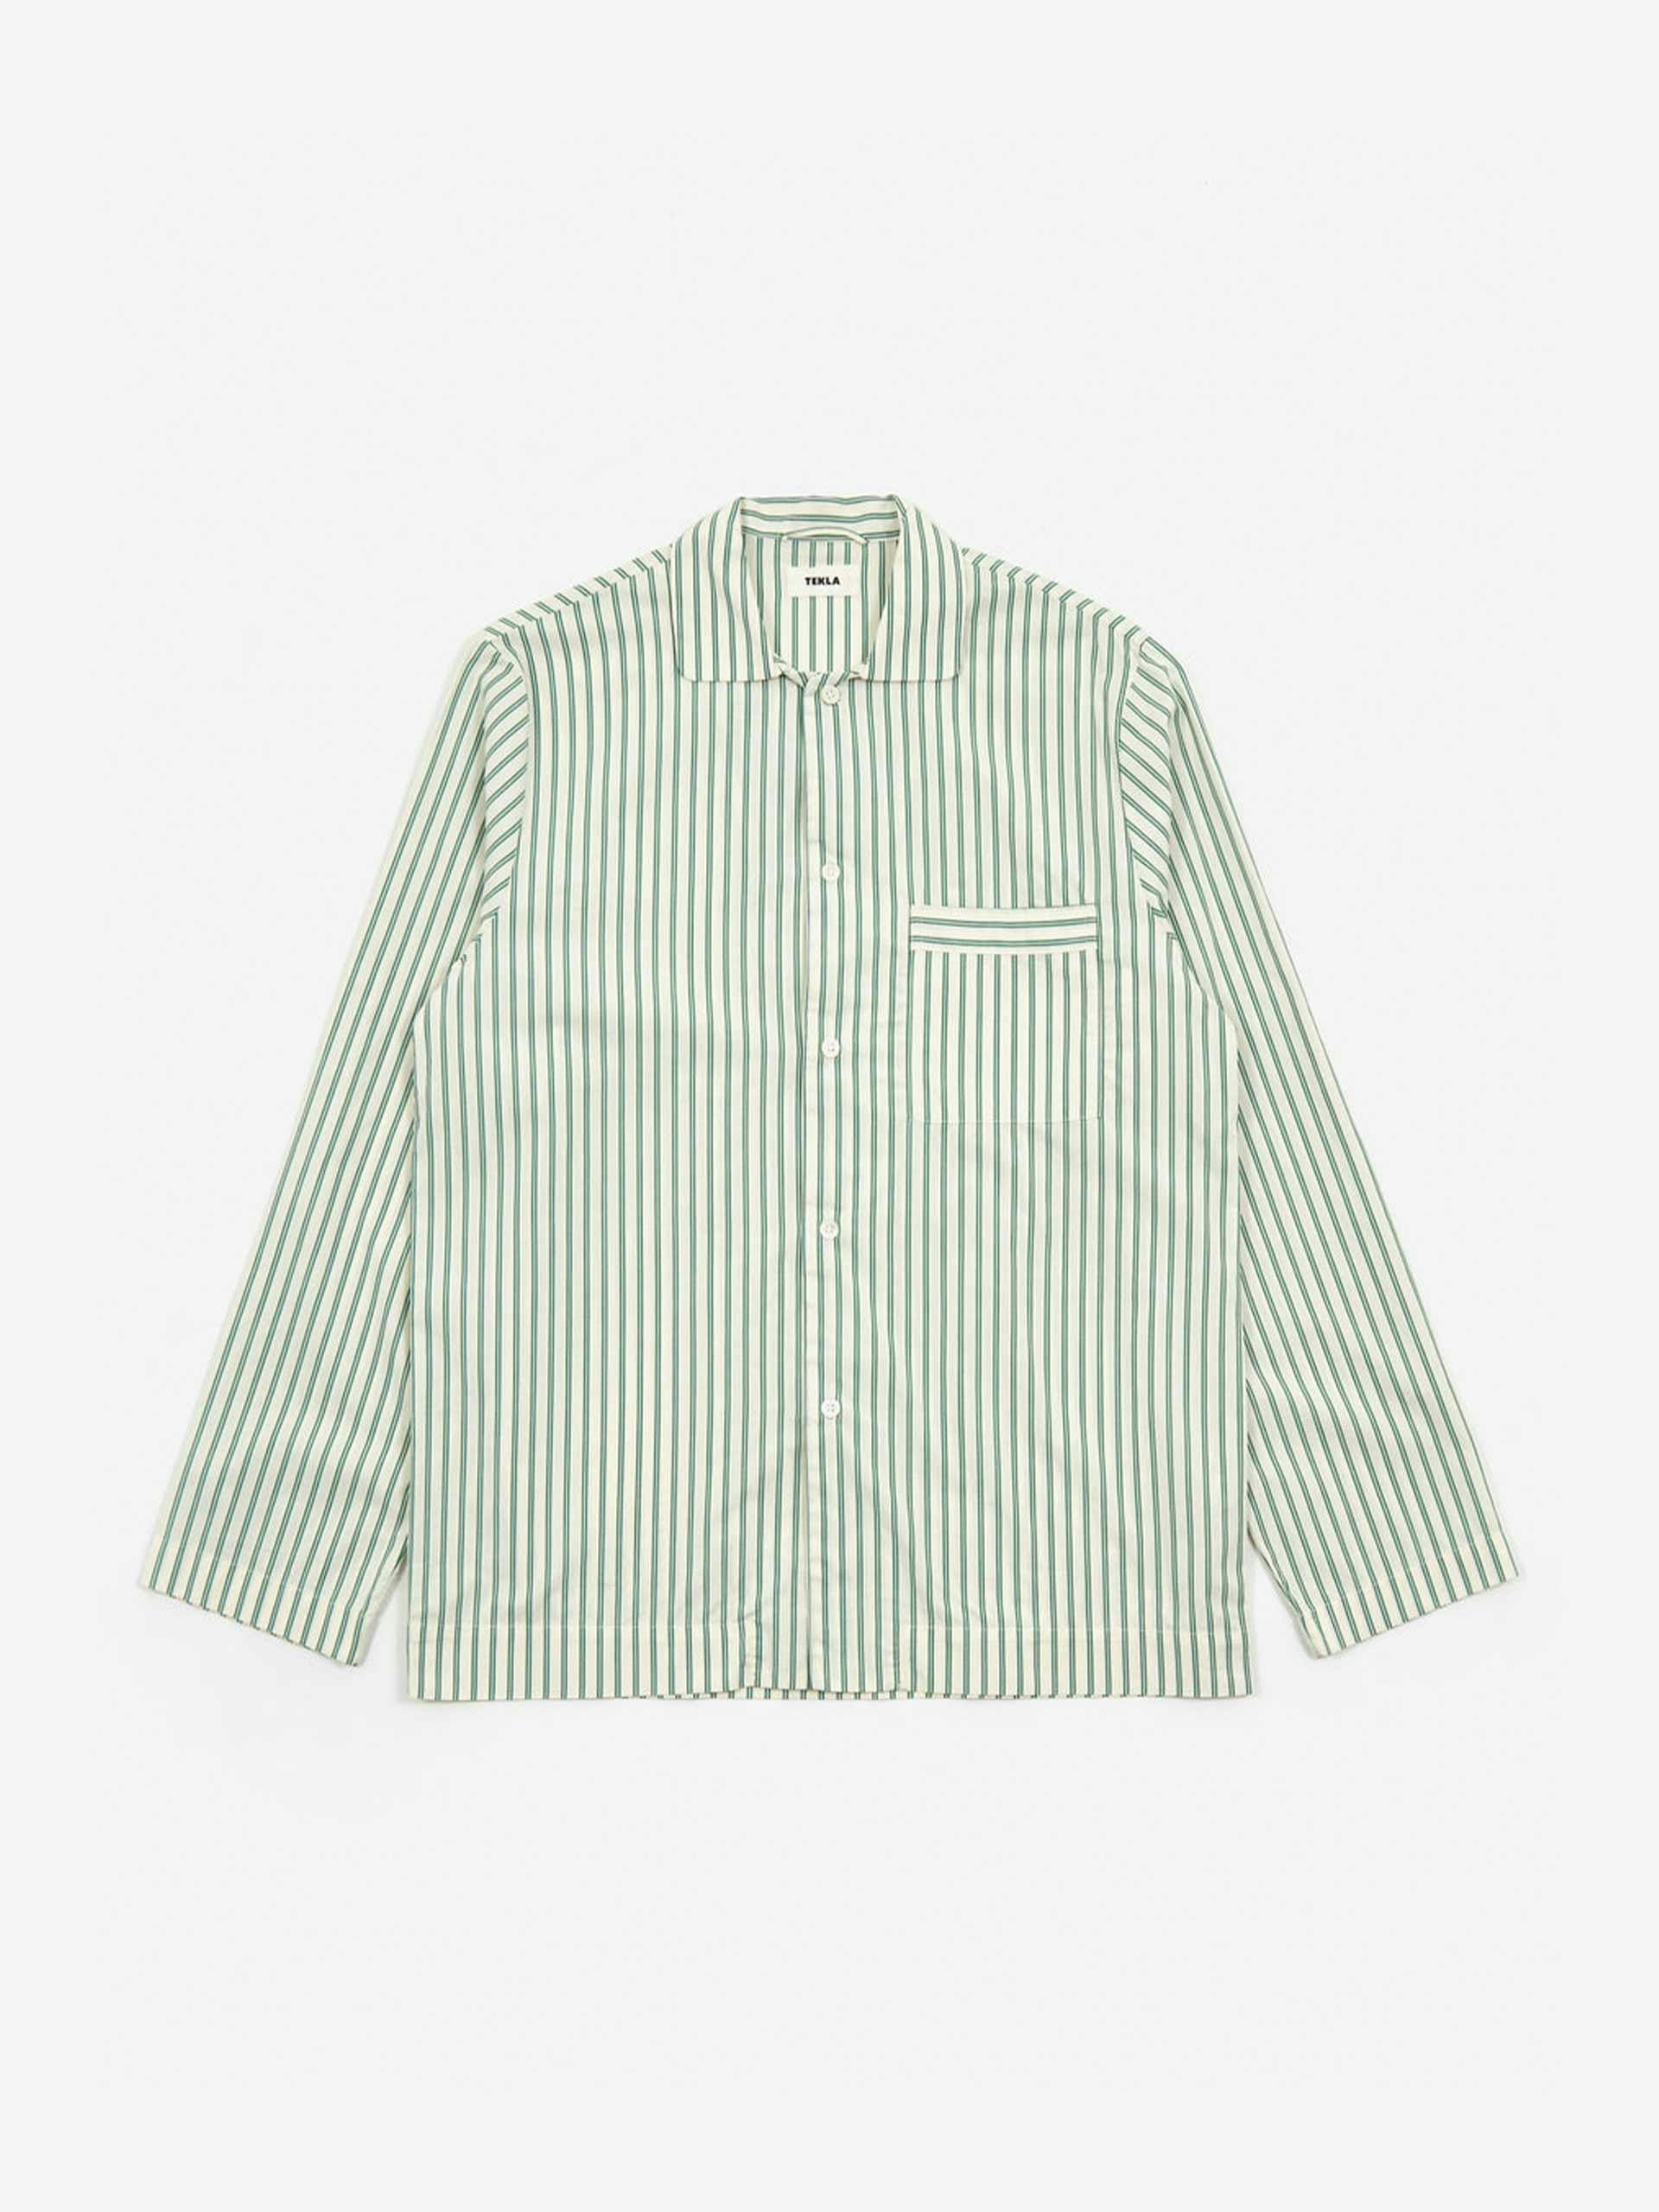 Cotton poplin pyjama shirt in clover stripes